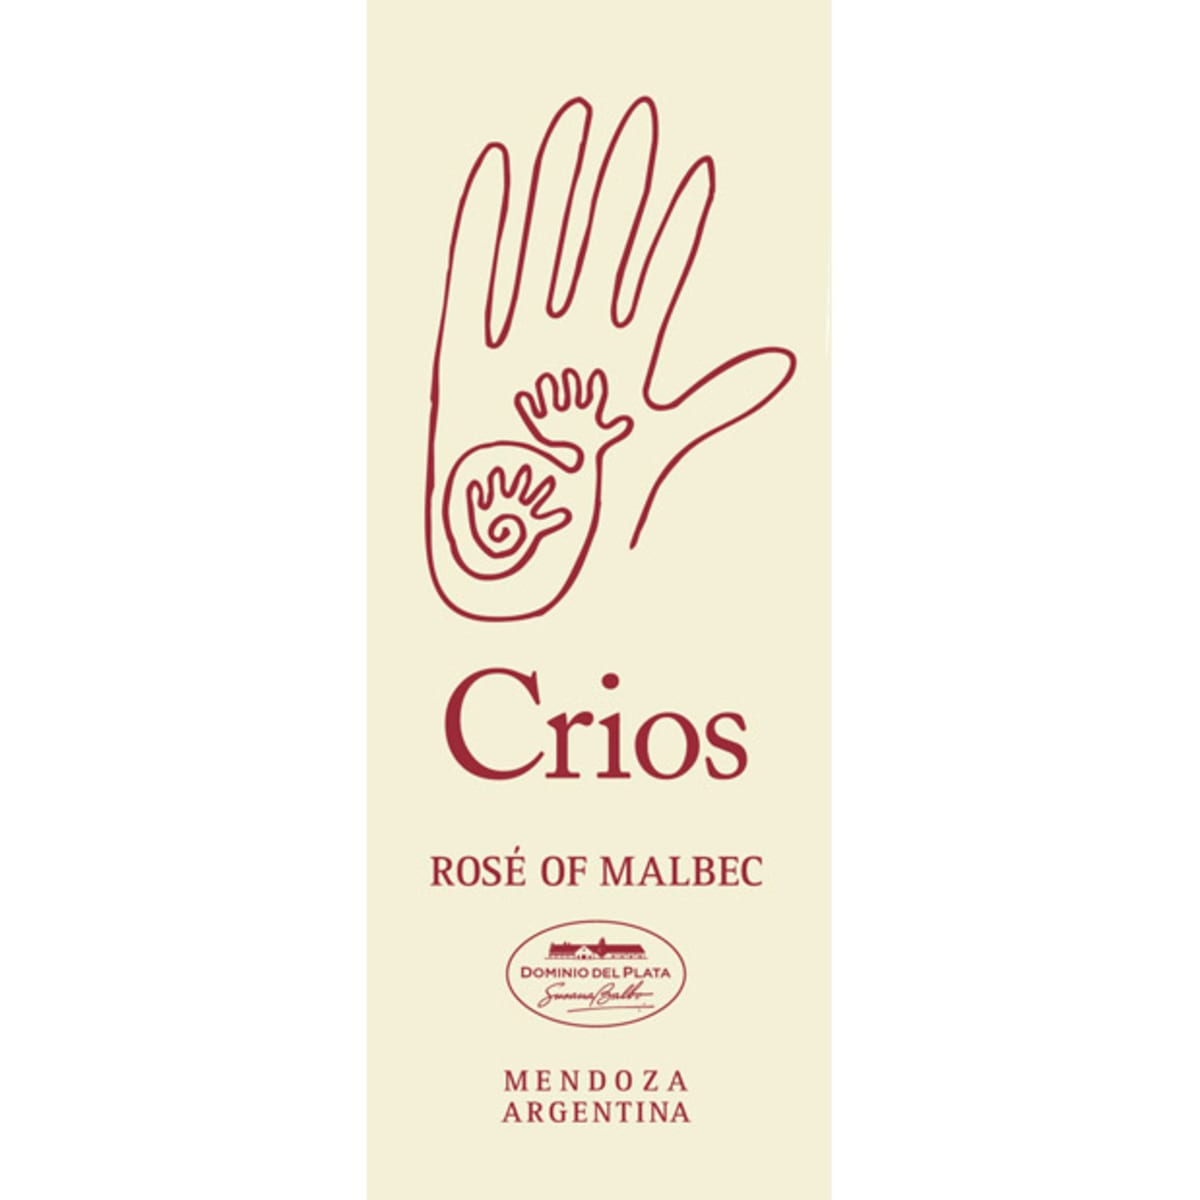 Crios de Susana Balbo Rose of Malbec 2012 Front Label